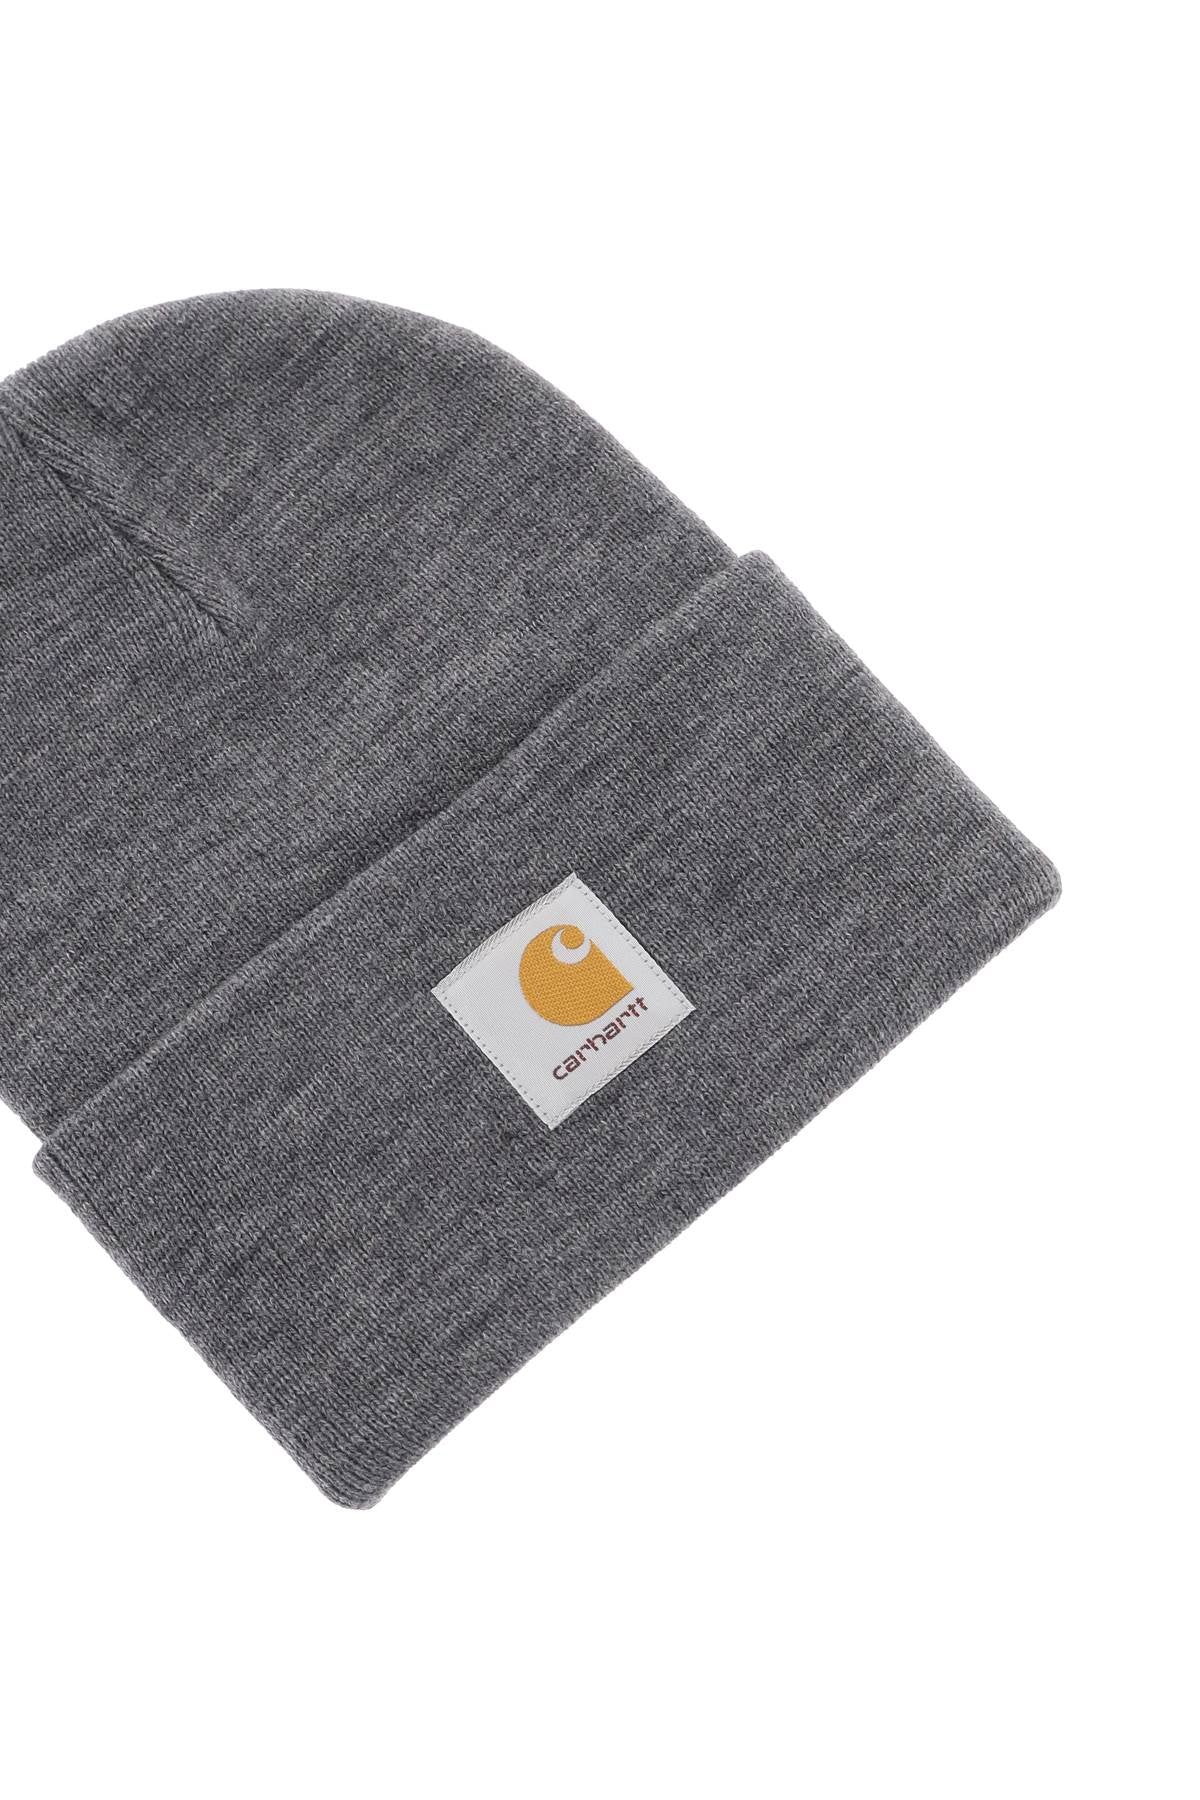 Carhartt Wip Logo Patch Beanie Hat   Grey